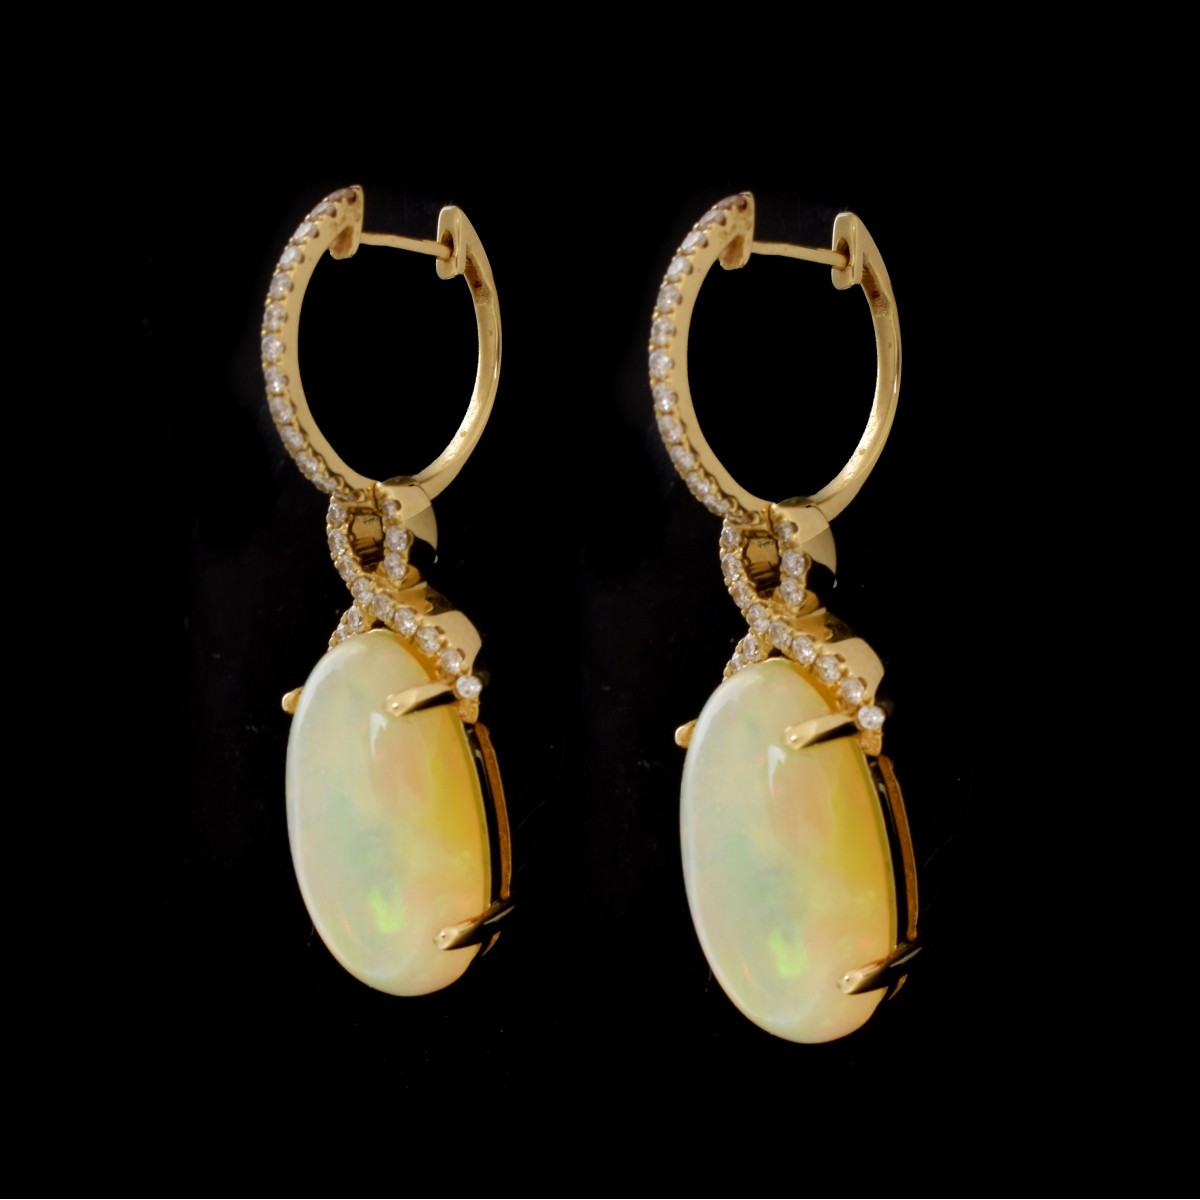 Opal, Diamond and 14K Earrings